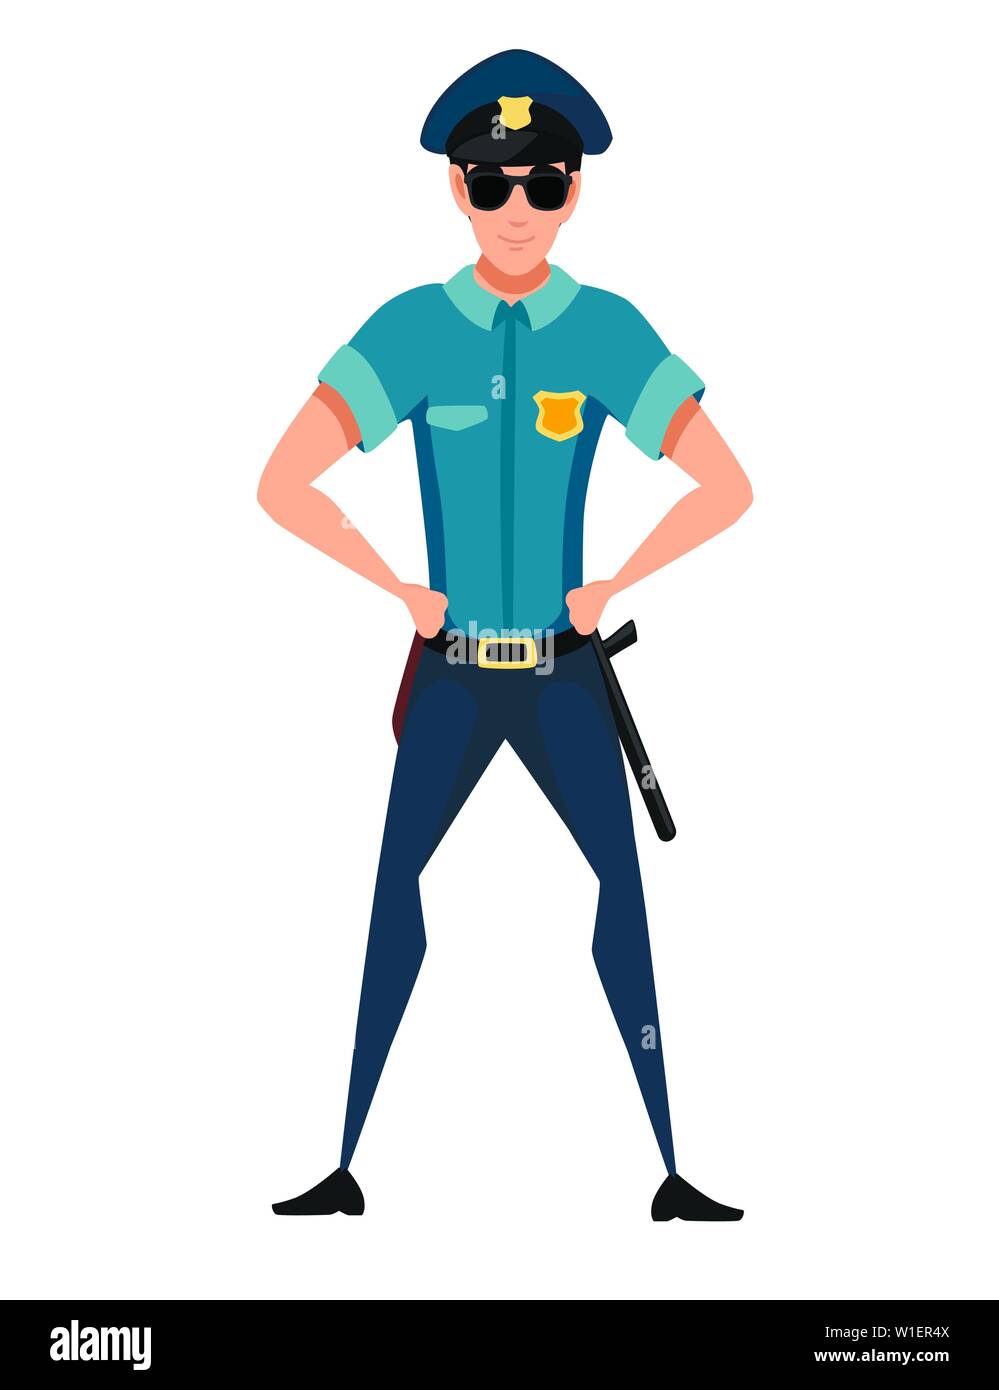 Police officer wearing dark blue pants light blue shirt and black sunglasses cartoon character design flat vector illustration. Stock Vector